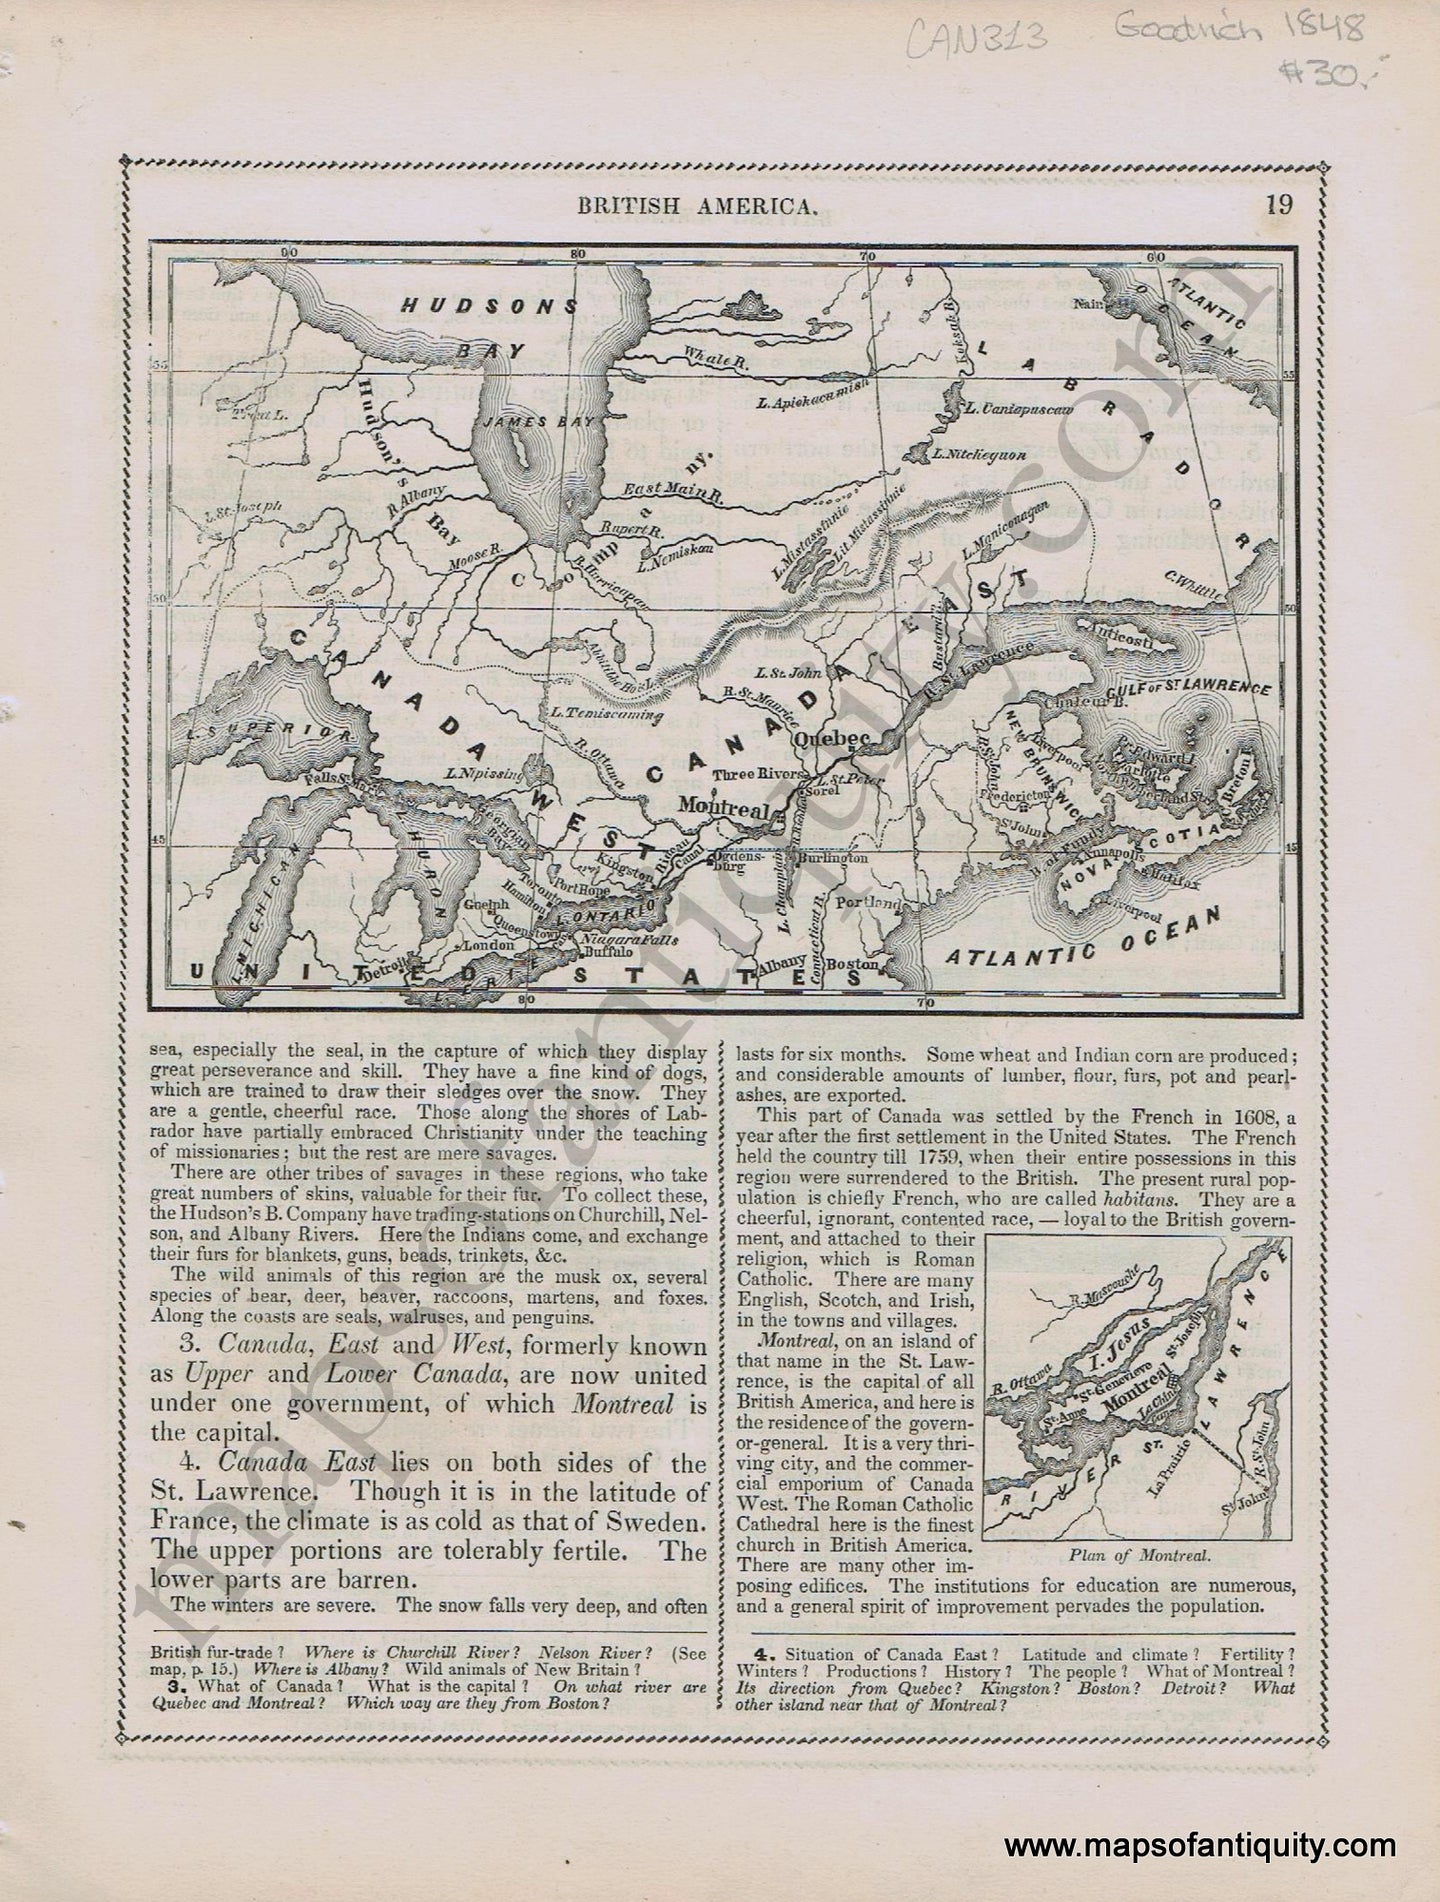 Antique-Black-and-White-Map-British-America-1848-Goodrich-Canada-1800s-19th-century-Maps-of-Antiquity